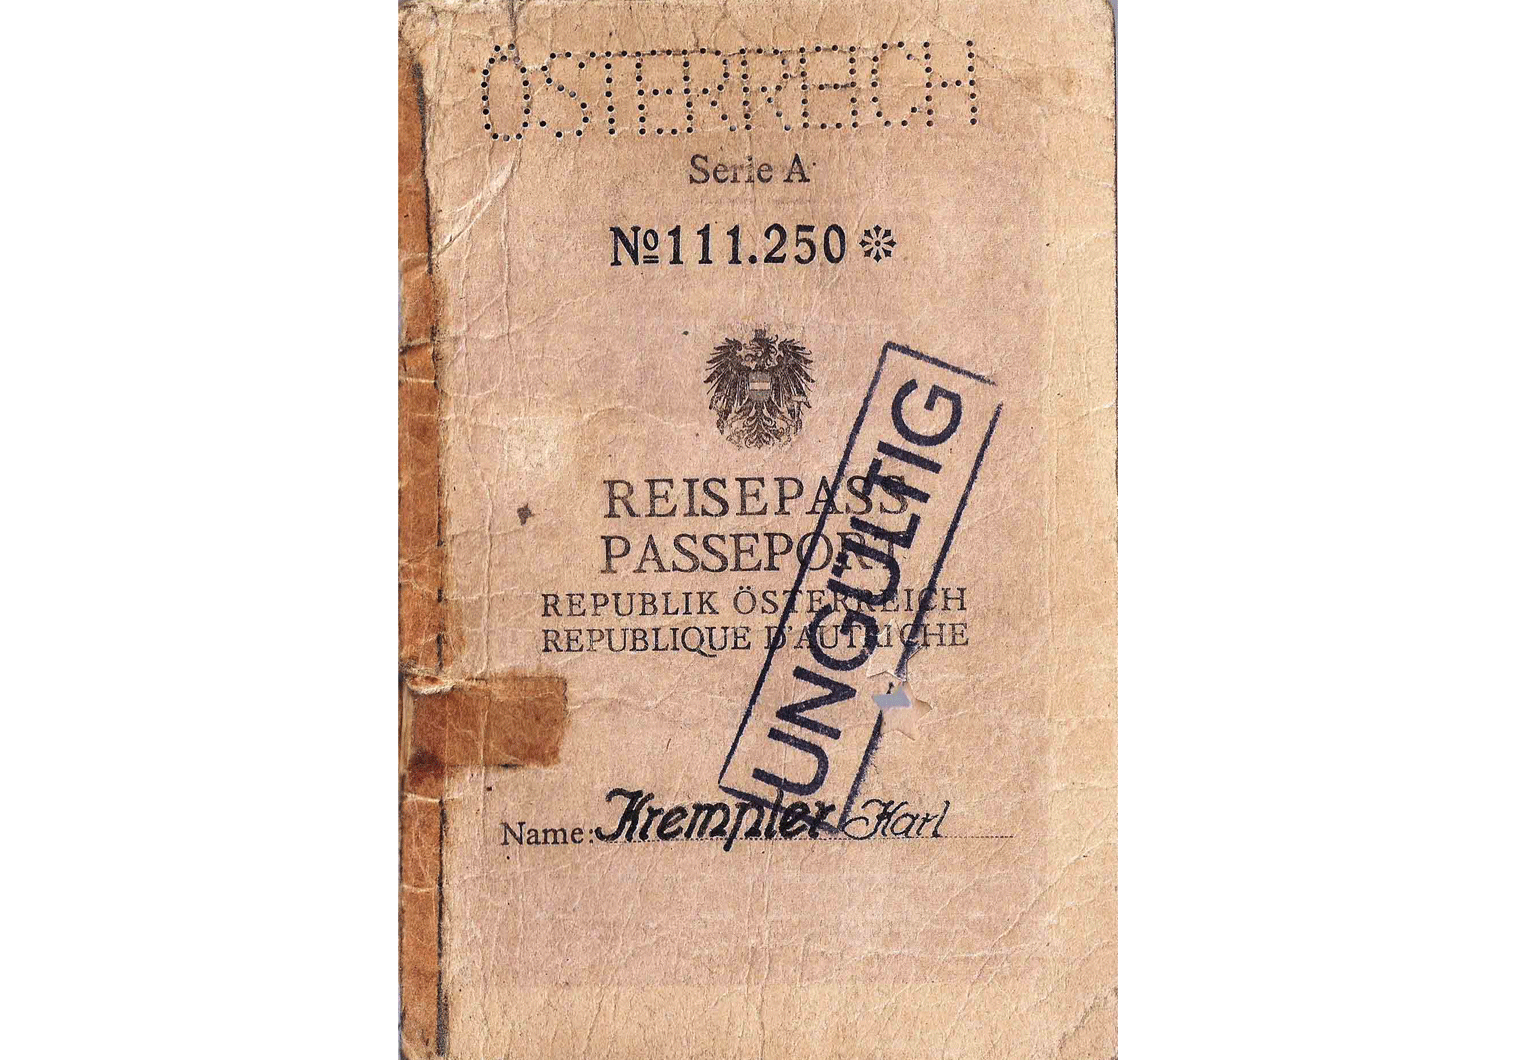 ww2 German passport for SS